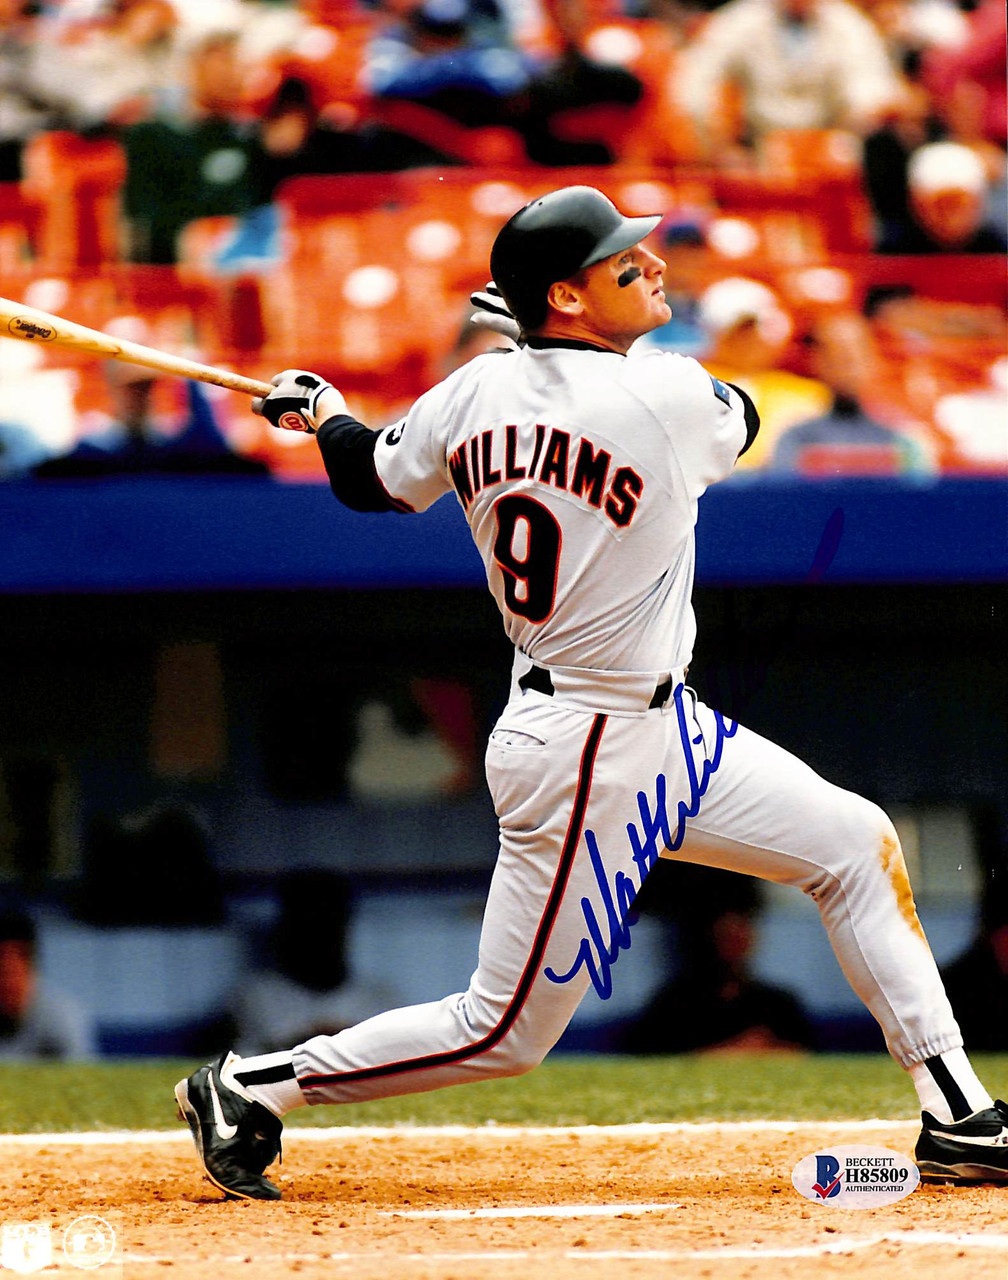 MATT WILLIAMS Signed 8x10 MLB Color Photo w COA San Francisco Giants UNLV  